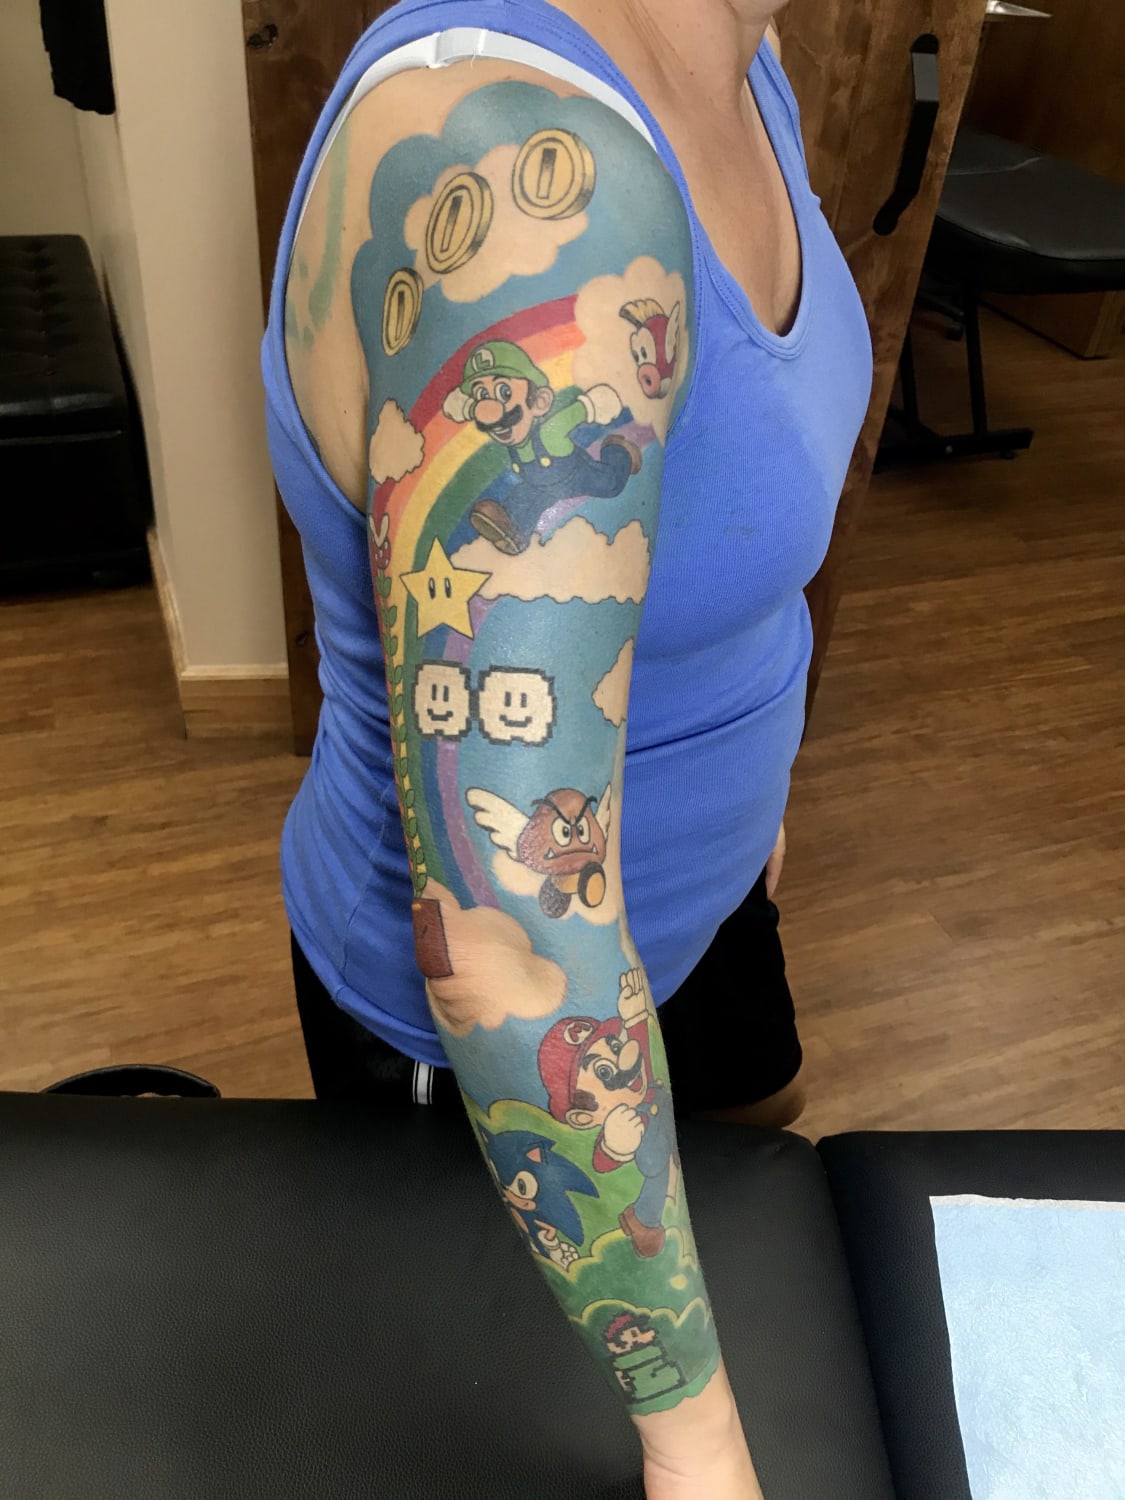 Super Mario (mostly) sleeve by Jennifer Bradbury at Skin Deep Tattoo Waikiki in Honolulu Hawaii. Some Mega Man, Zelda and Sonic references sprinkled in as well.